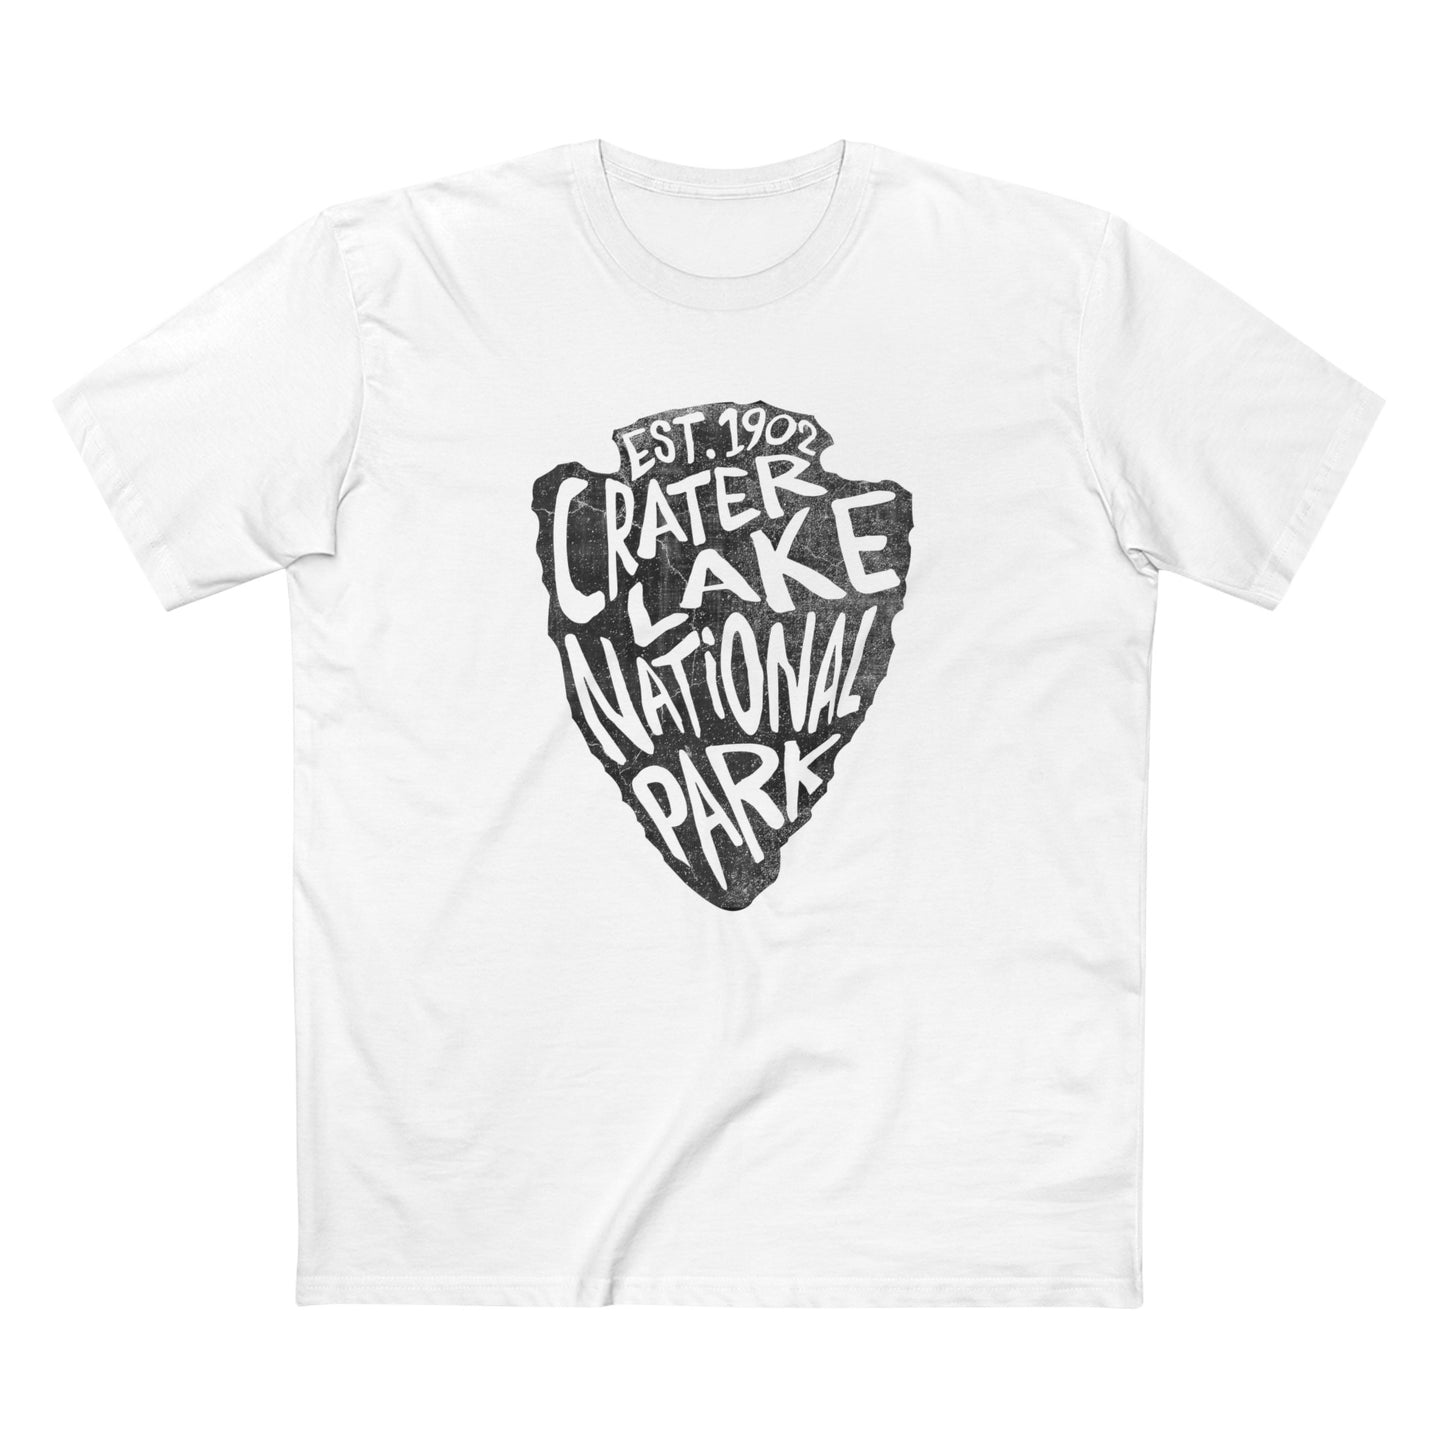 Crater Lake National Park T-Shirt - Arrowhead Design